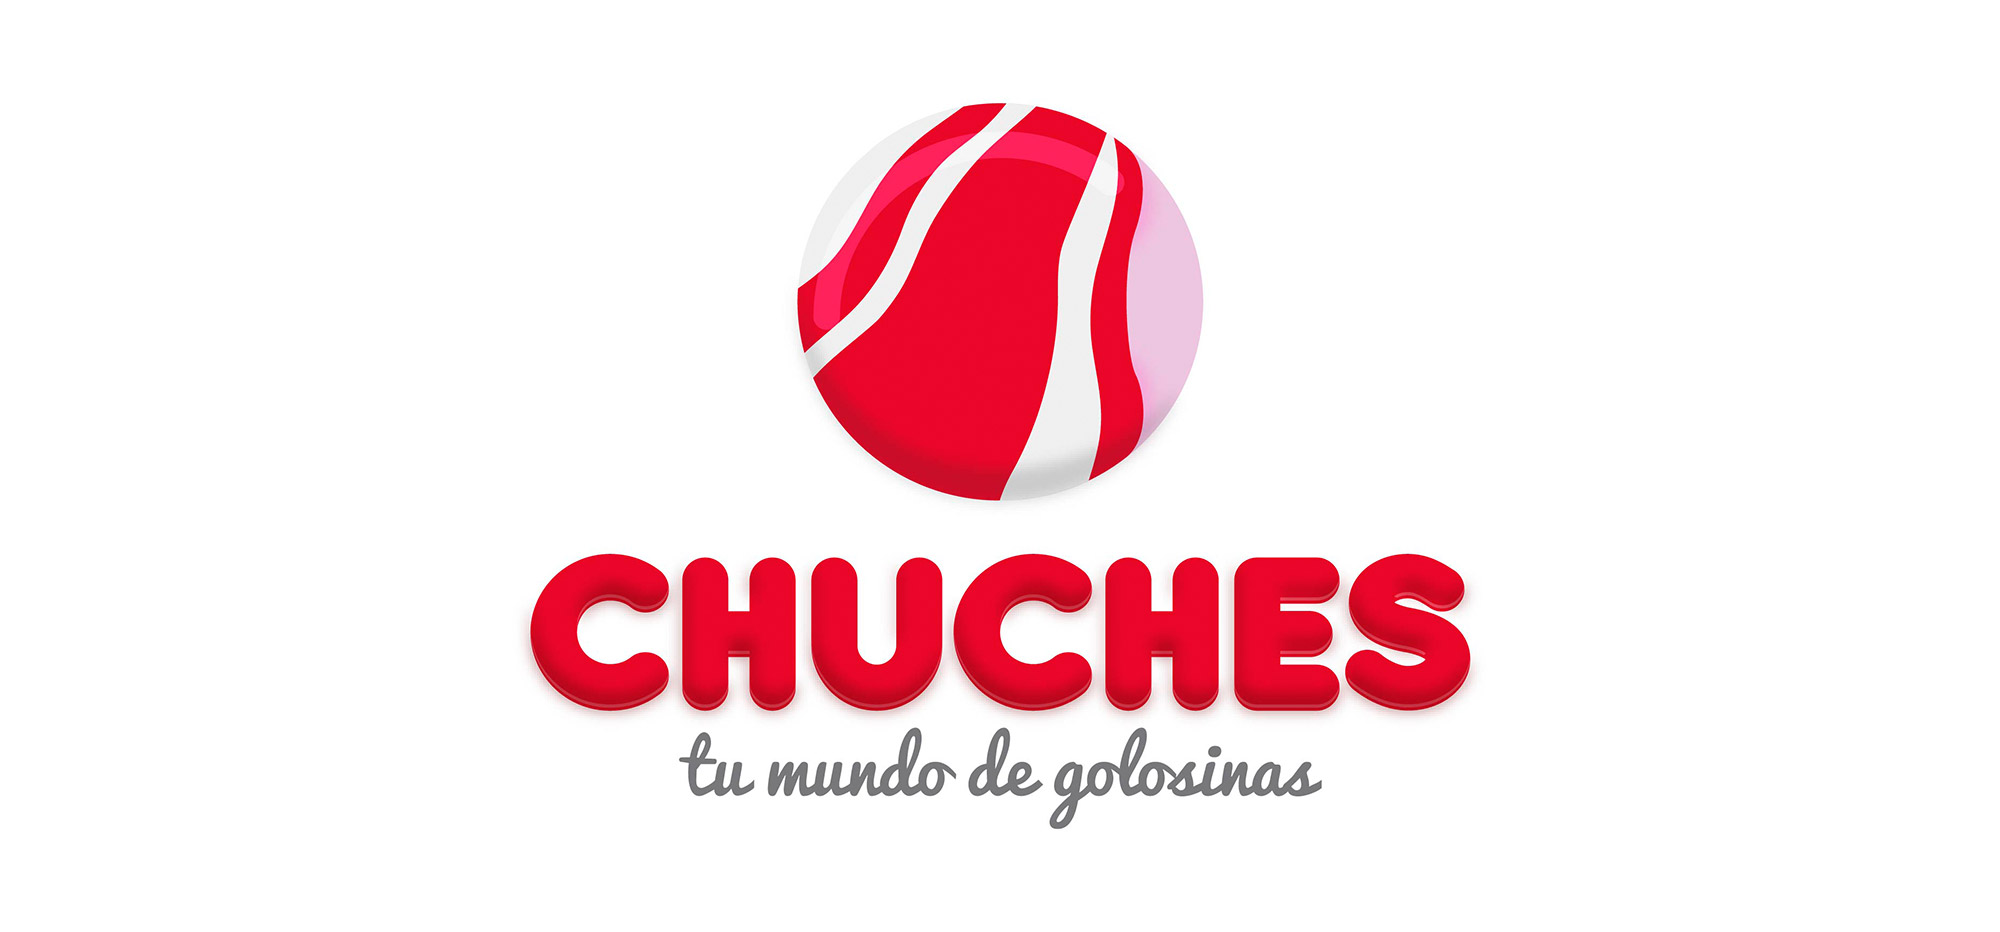 Chuches - Logotipo